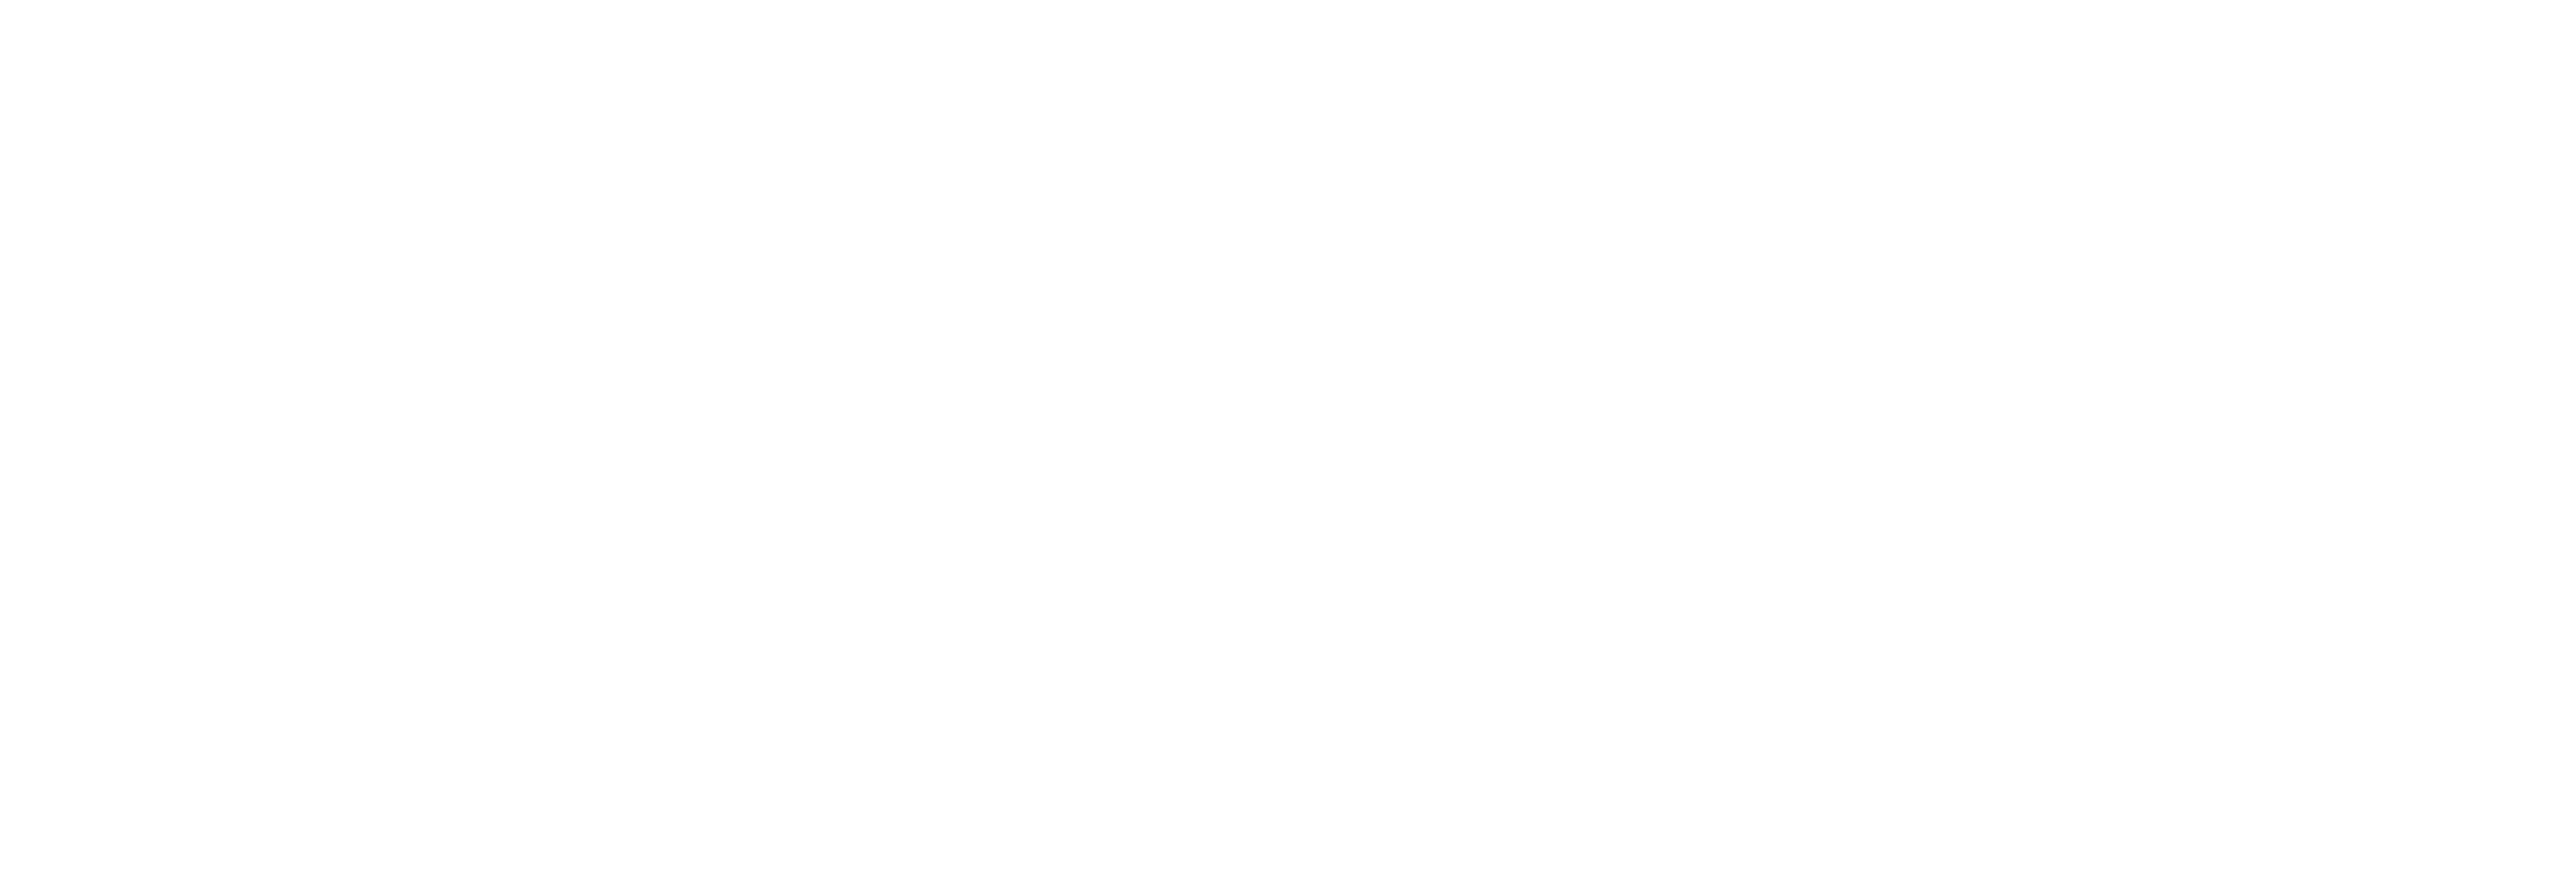 AniCura Tierklinik Thun logo